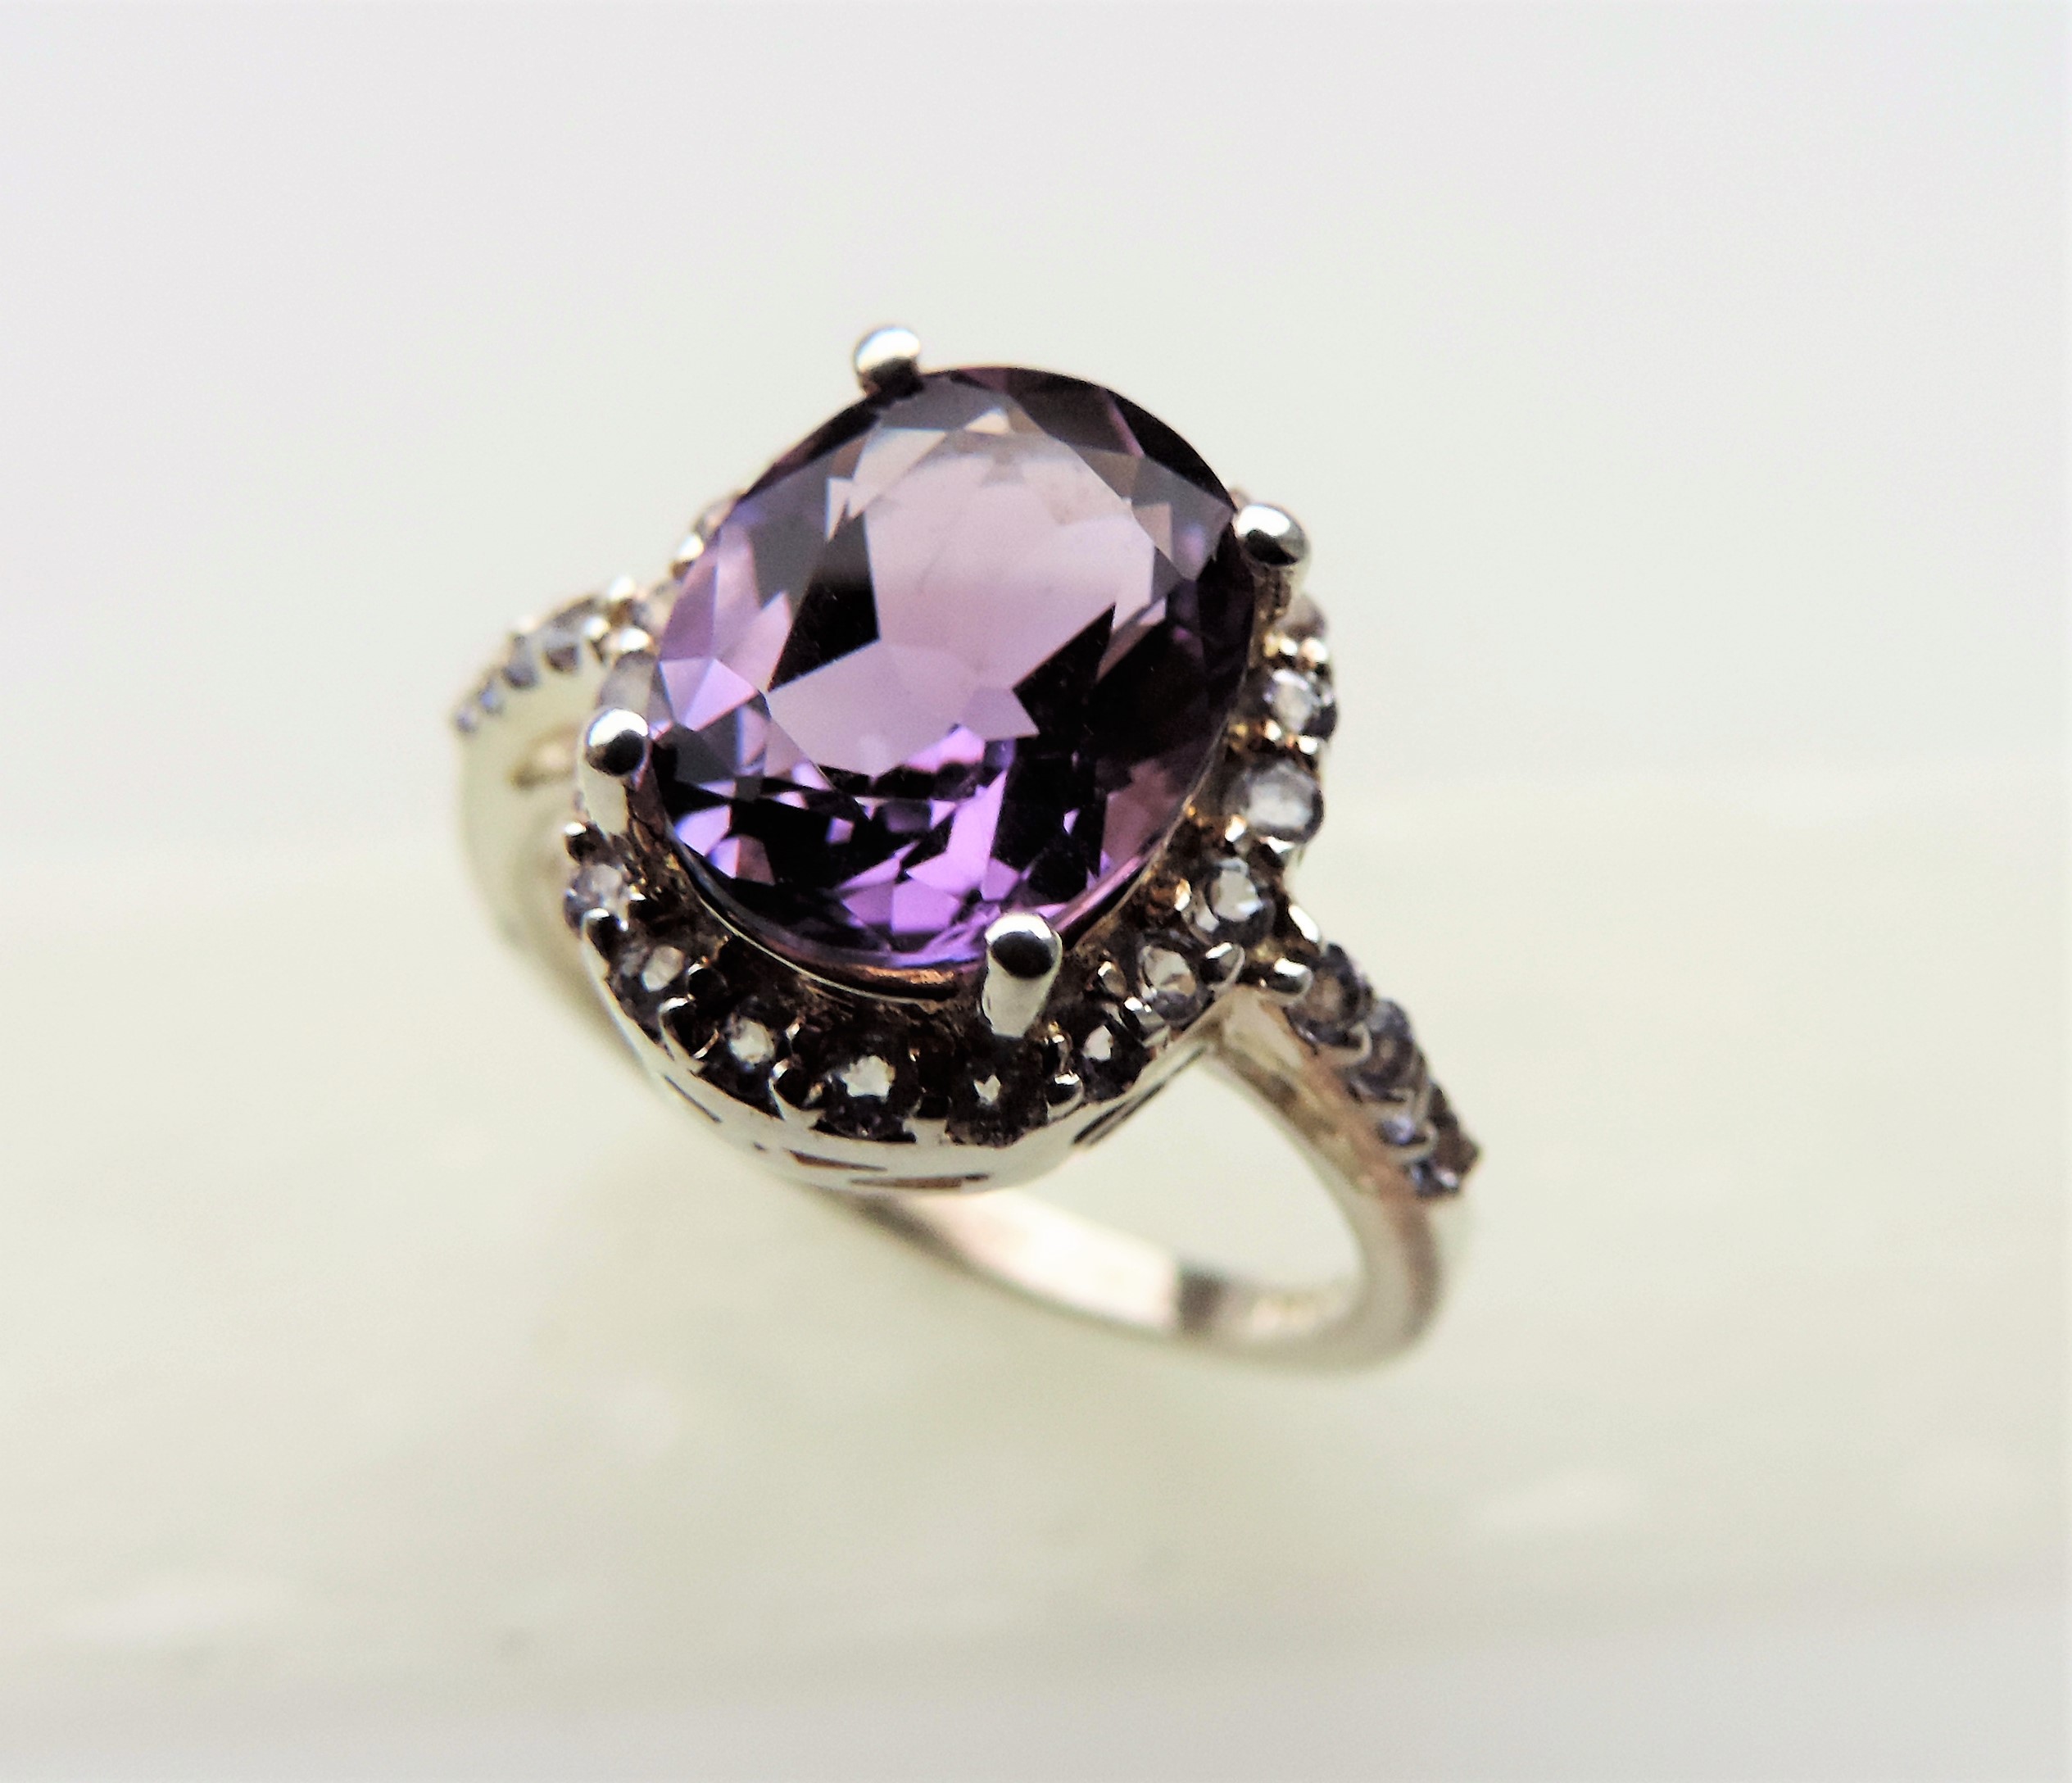 2.4 carat Amethyst & Diamond Ring - Image 5 of 6